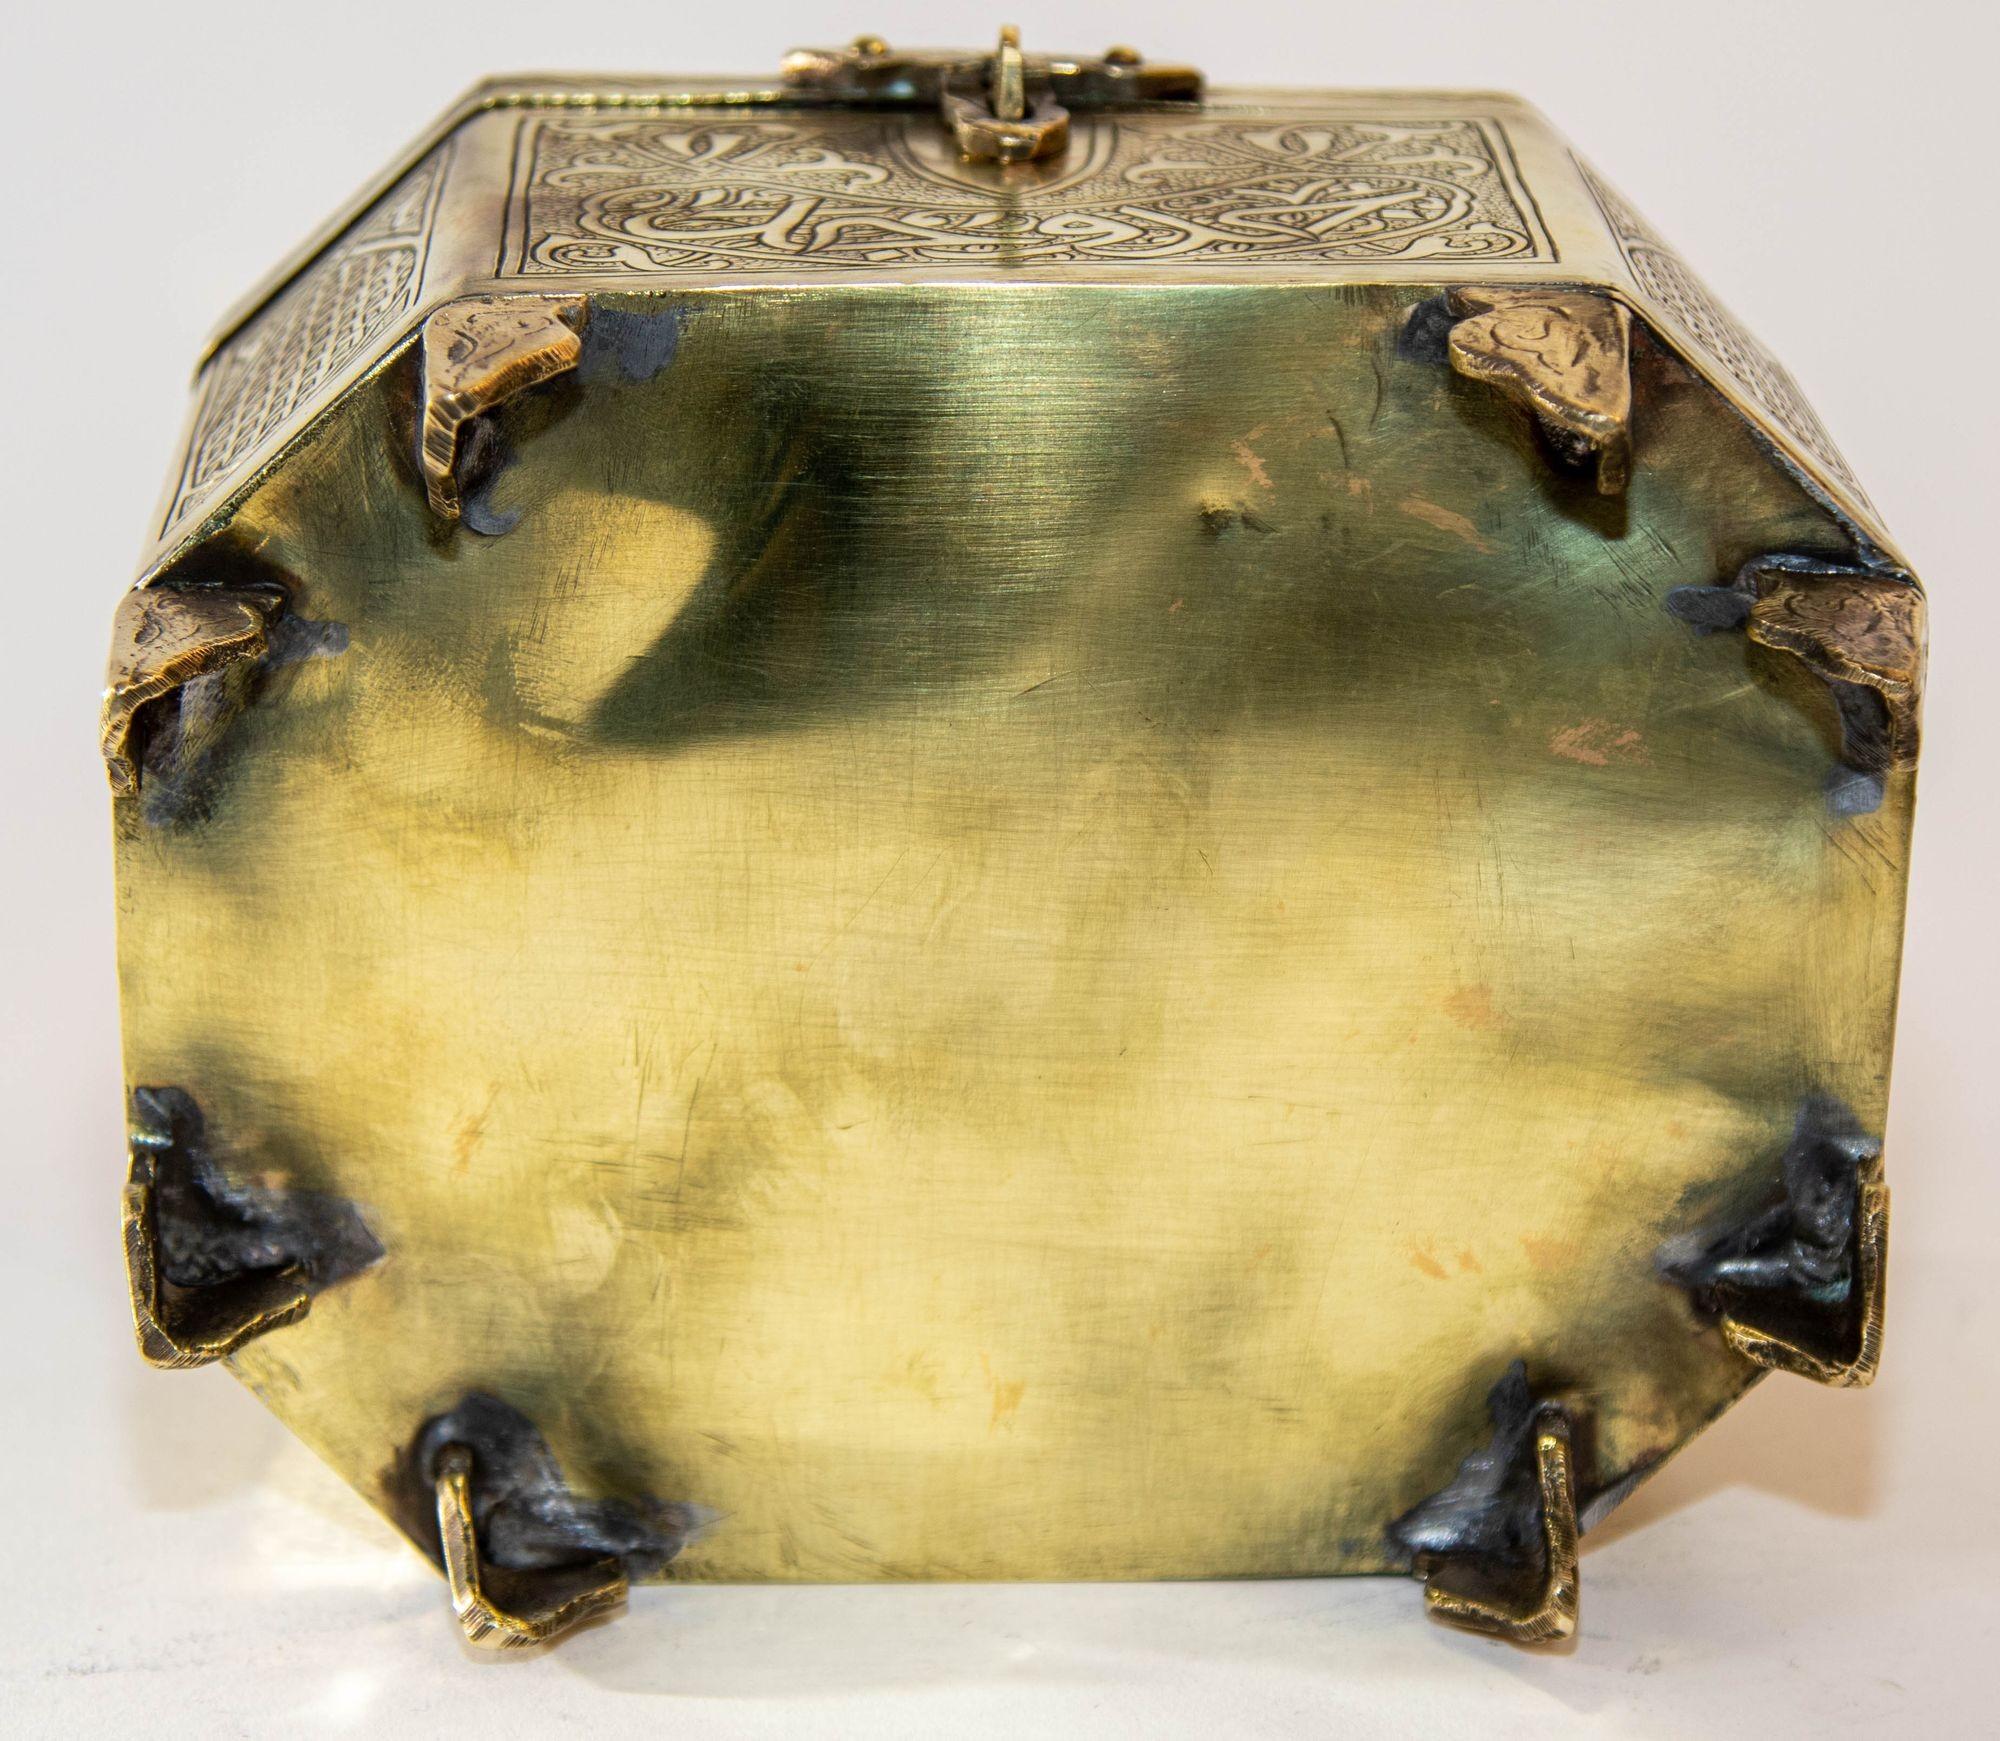 1920 Persian Brass Jewelry Box in Mamluk Revival Damascene Moorish Islamic Style For Sale 3